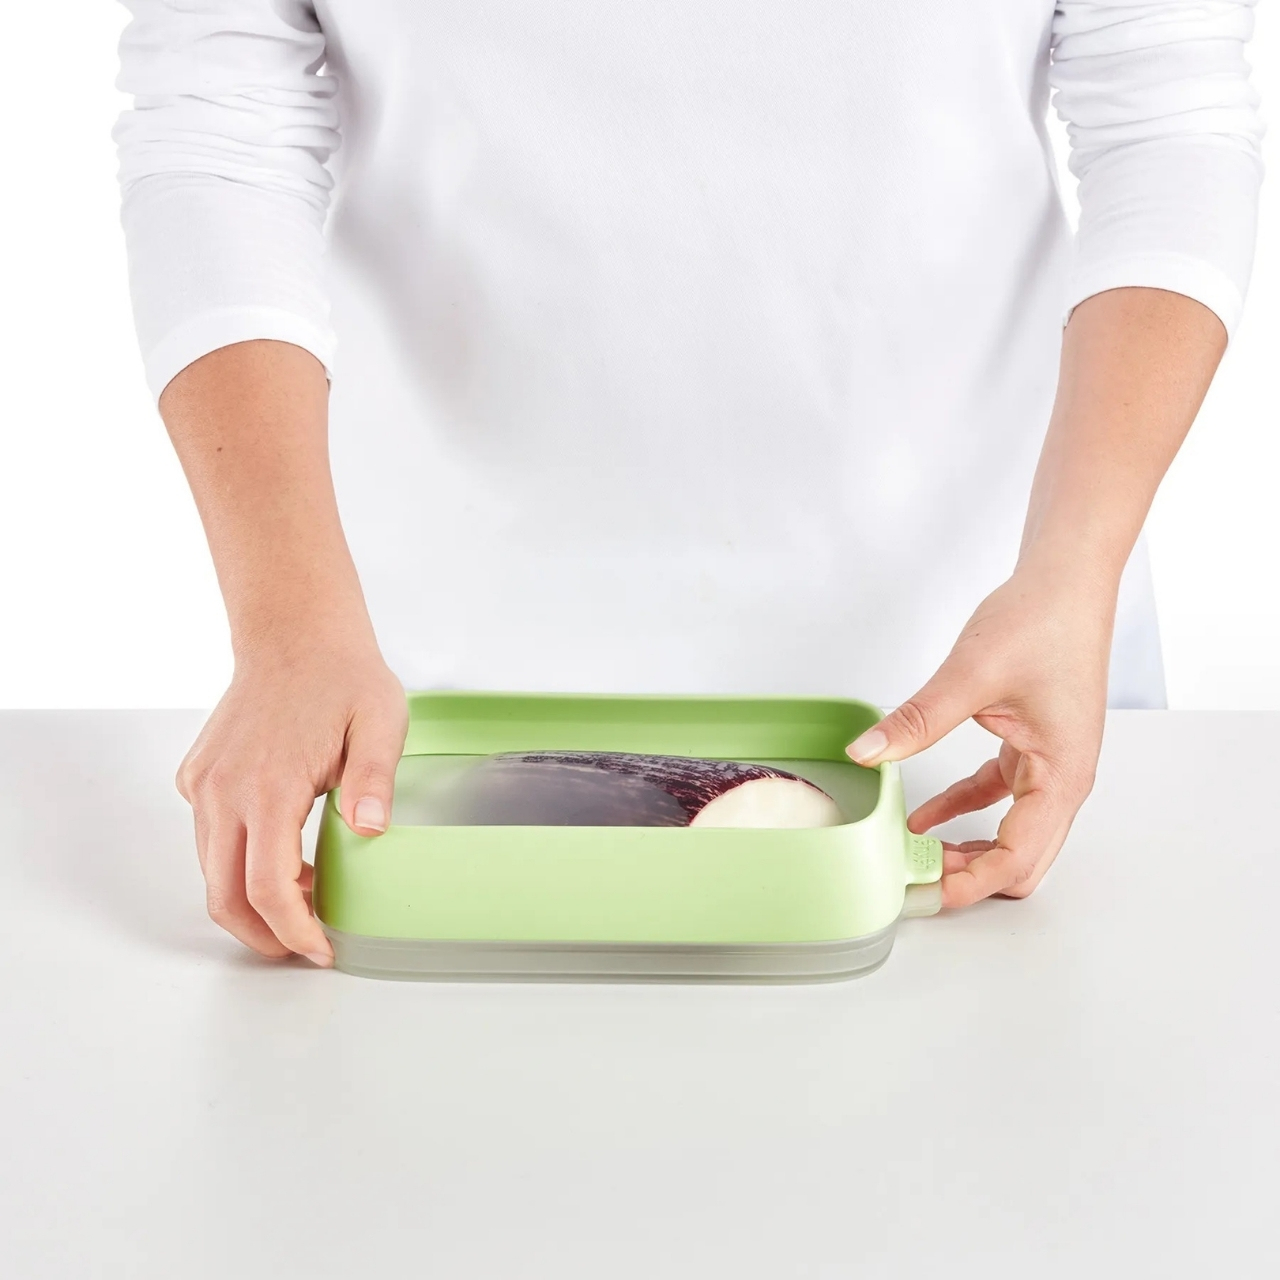 https://www.yankodesign.com/images/design_news/2022/07/reusable-seal-tray-helps-keep-veggies-fresh-and-reduce-single-use-plastic/5.jpg